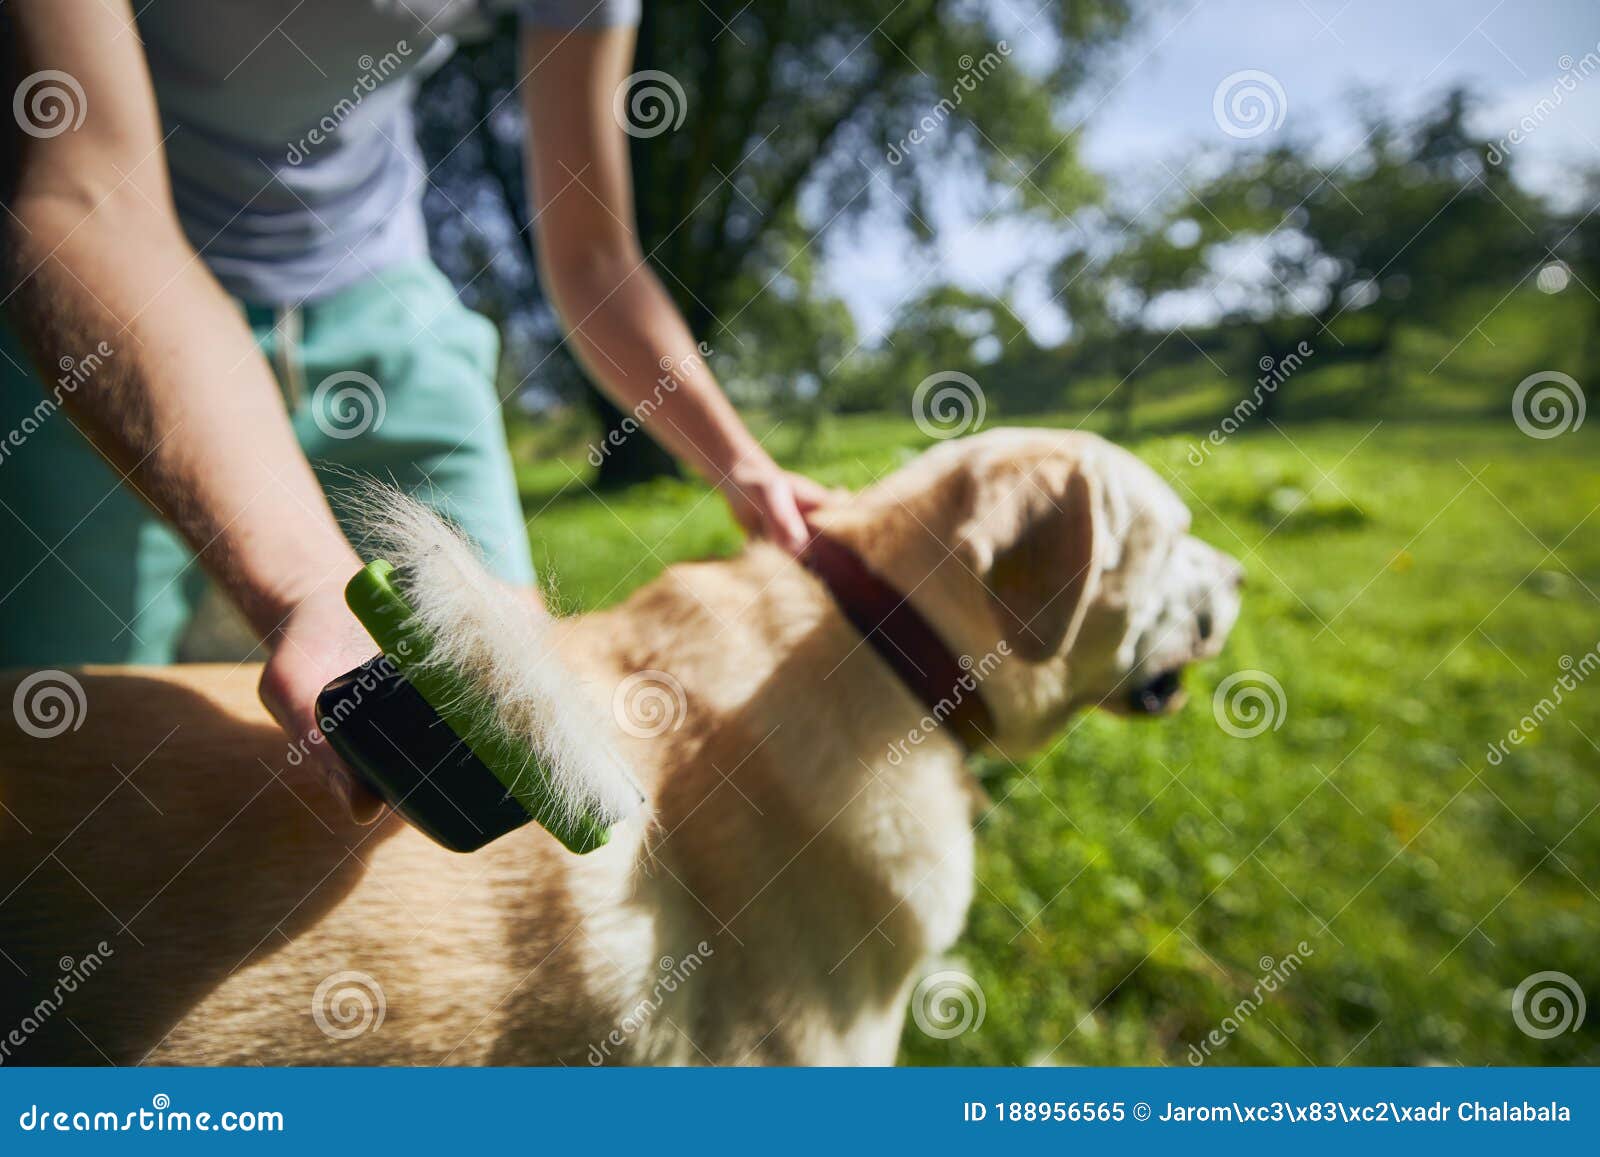 pet owner is brushing fur of his dog